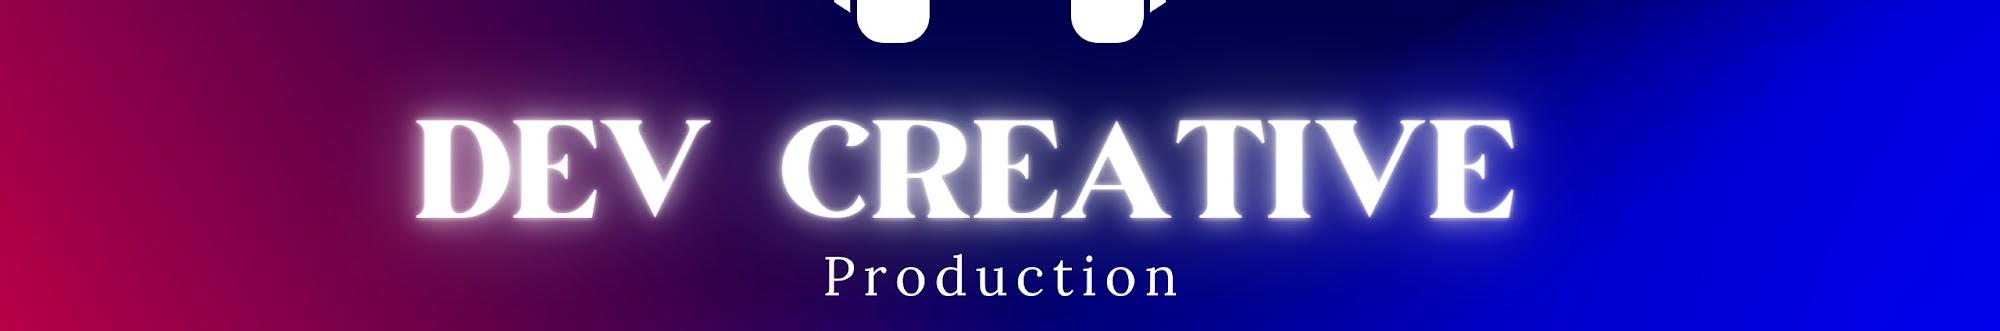 Dev Creative Production